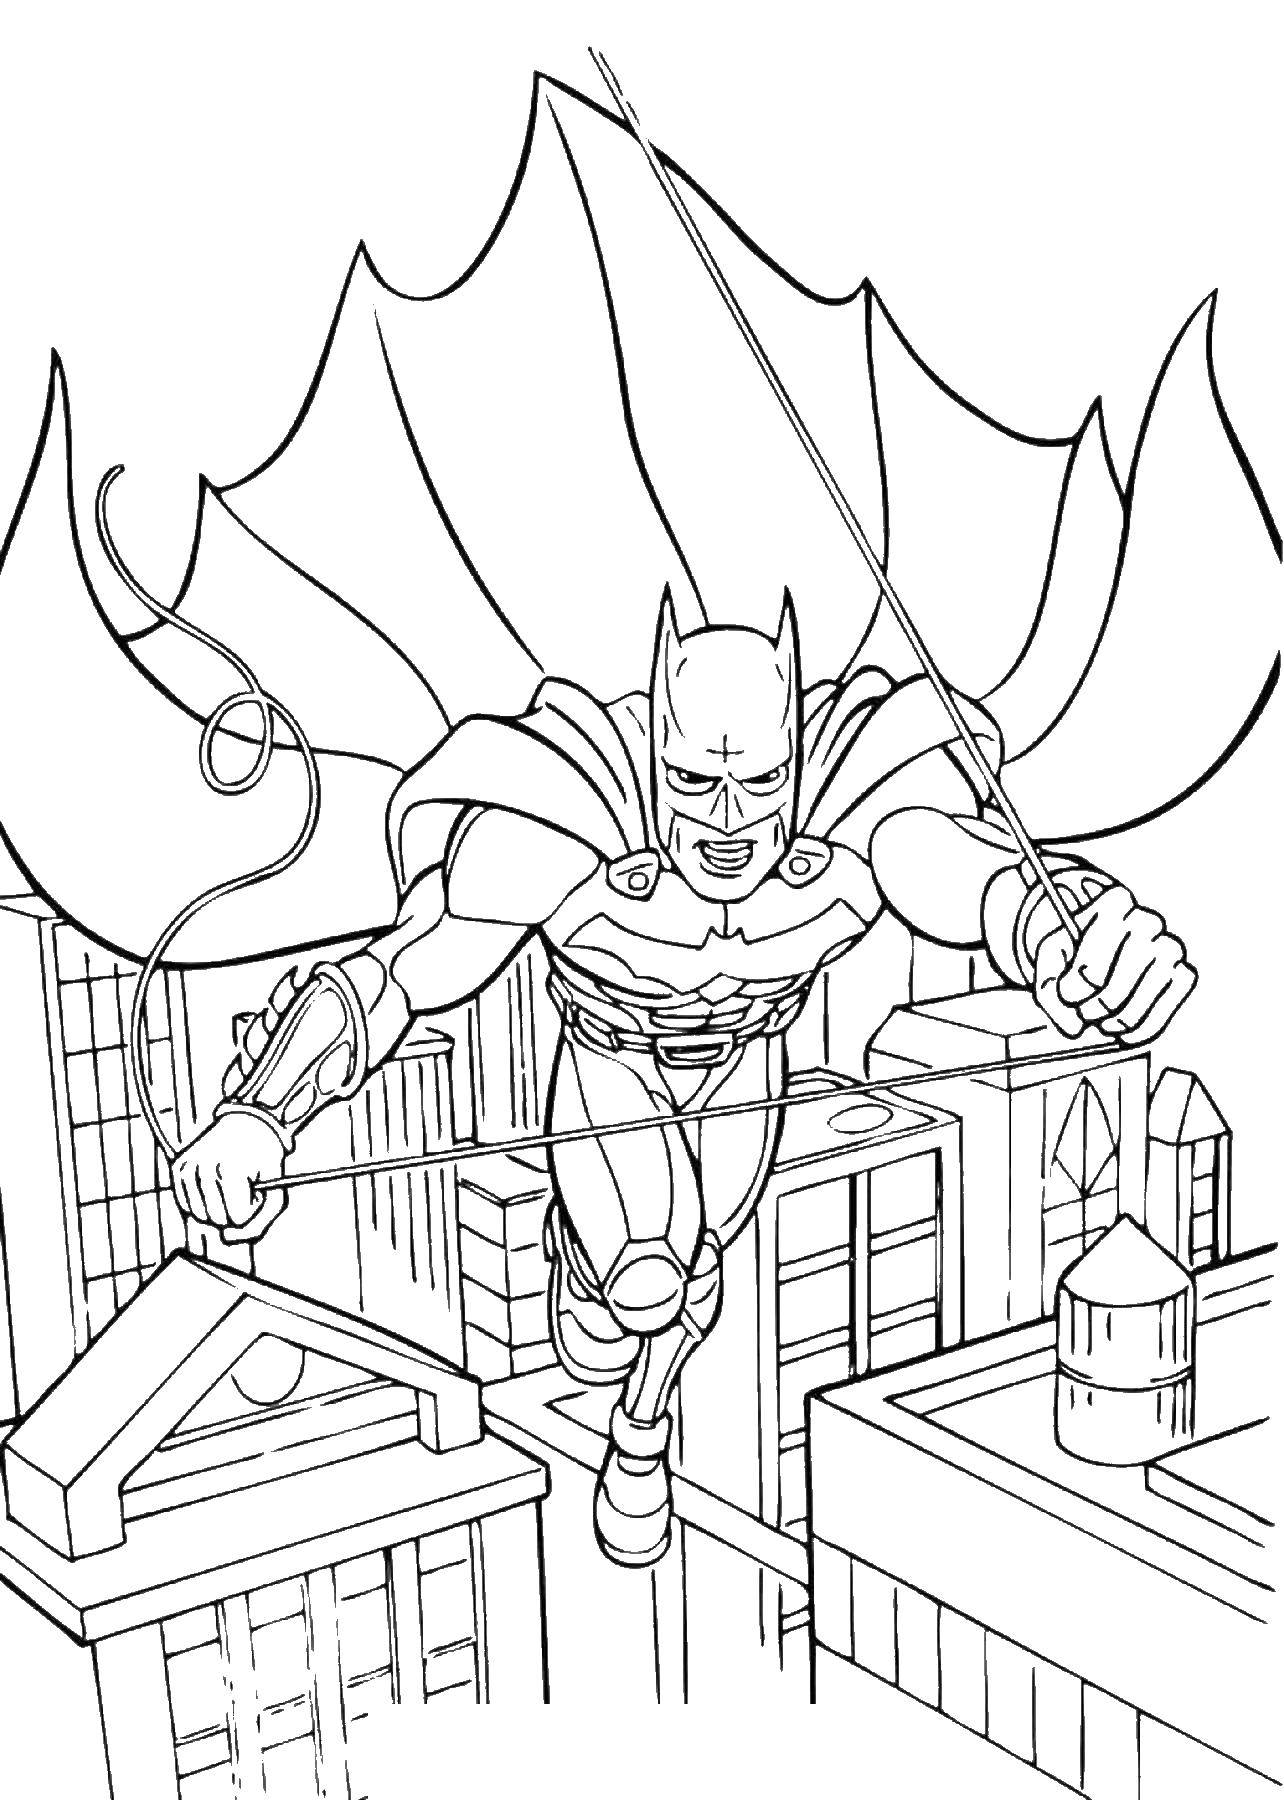 Coloring Batman in flight. Category superheroes. Tags:  Batman, superheroes.